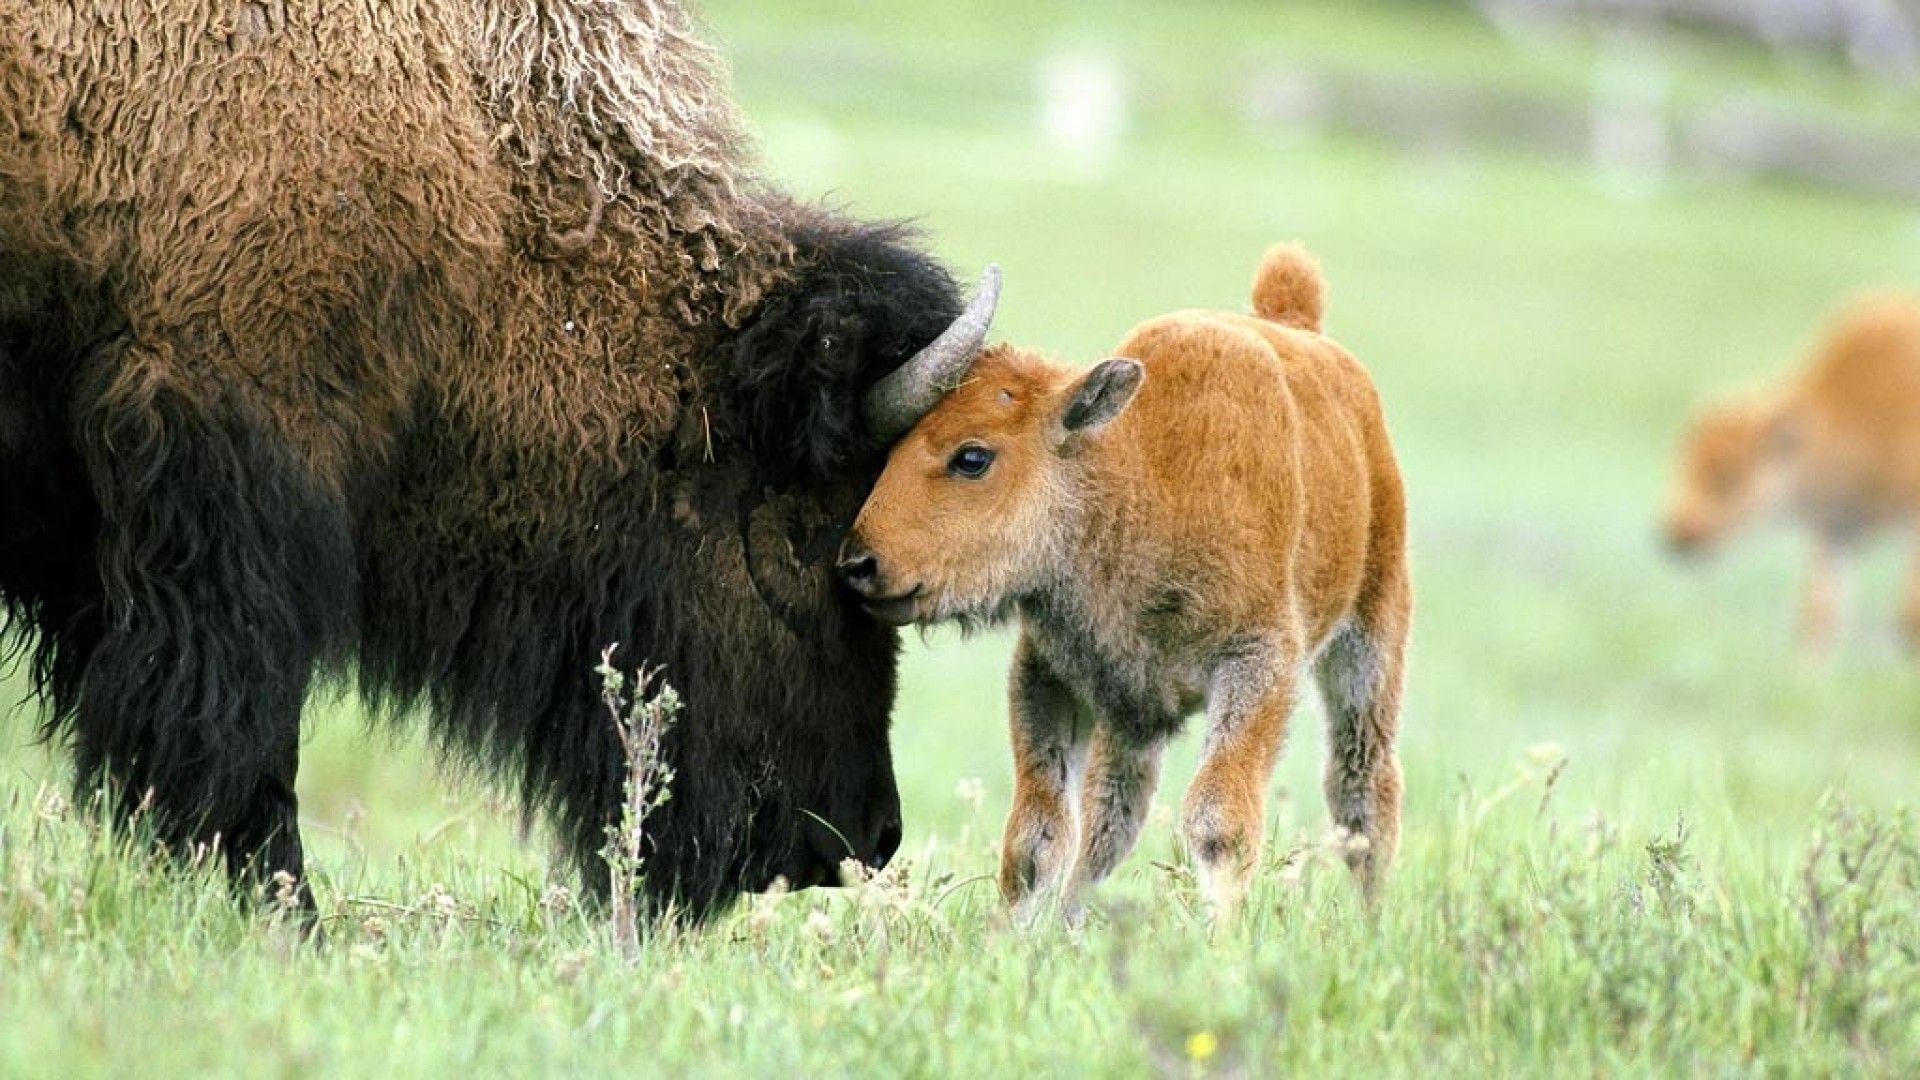 American bison baby wallpaper